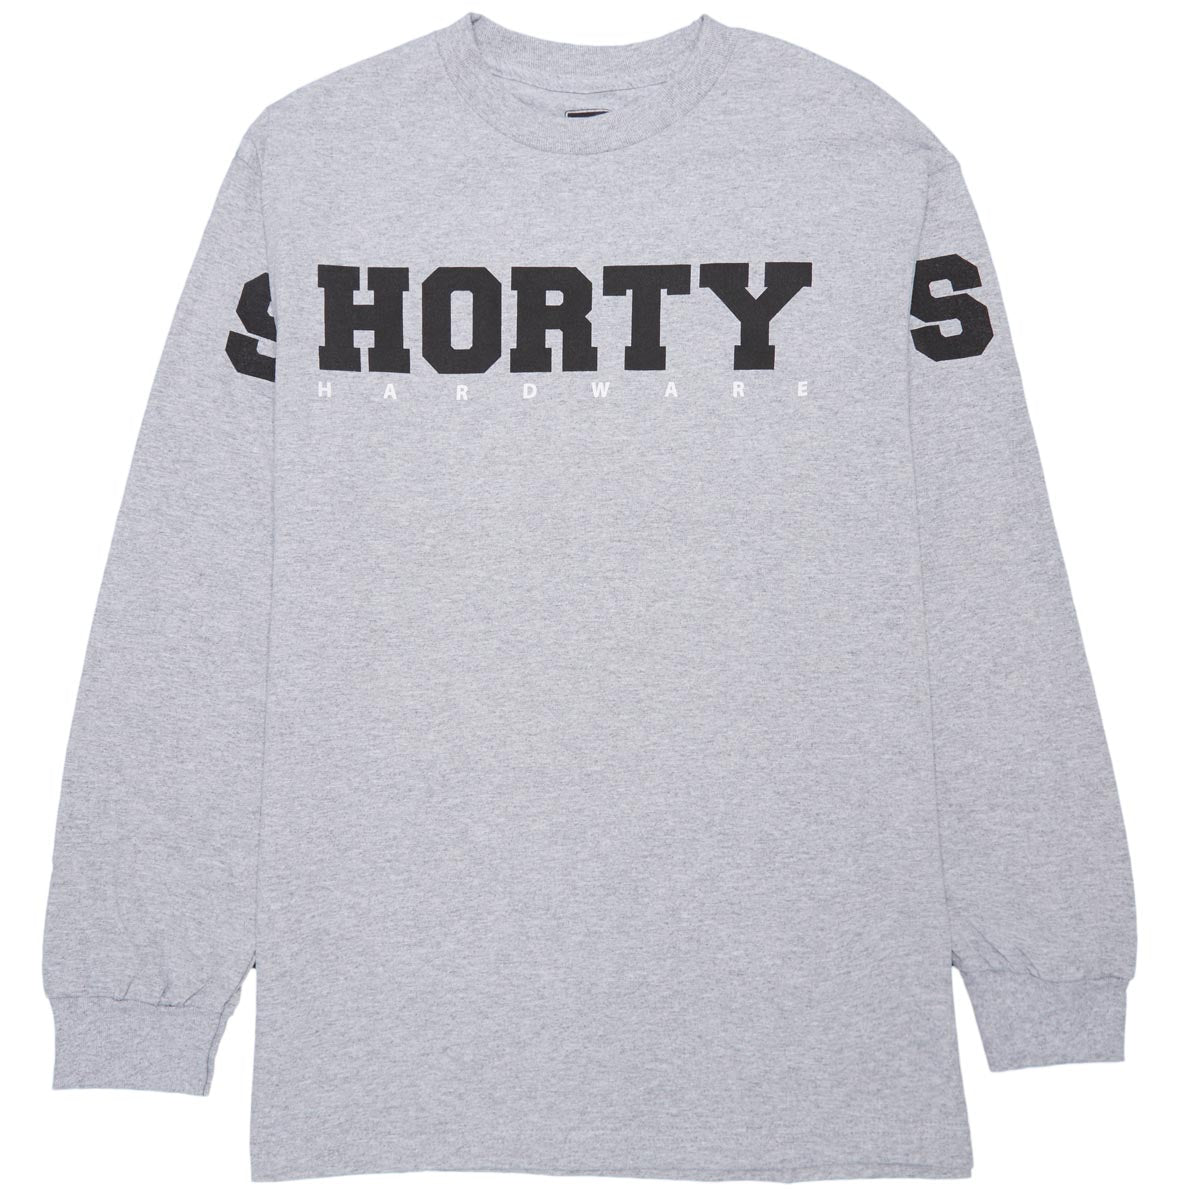 Shorty's S-horty-S Long Sleeve T-Shirt - Athletic Grey image 1